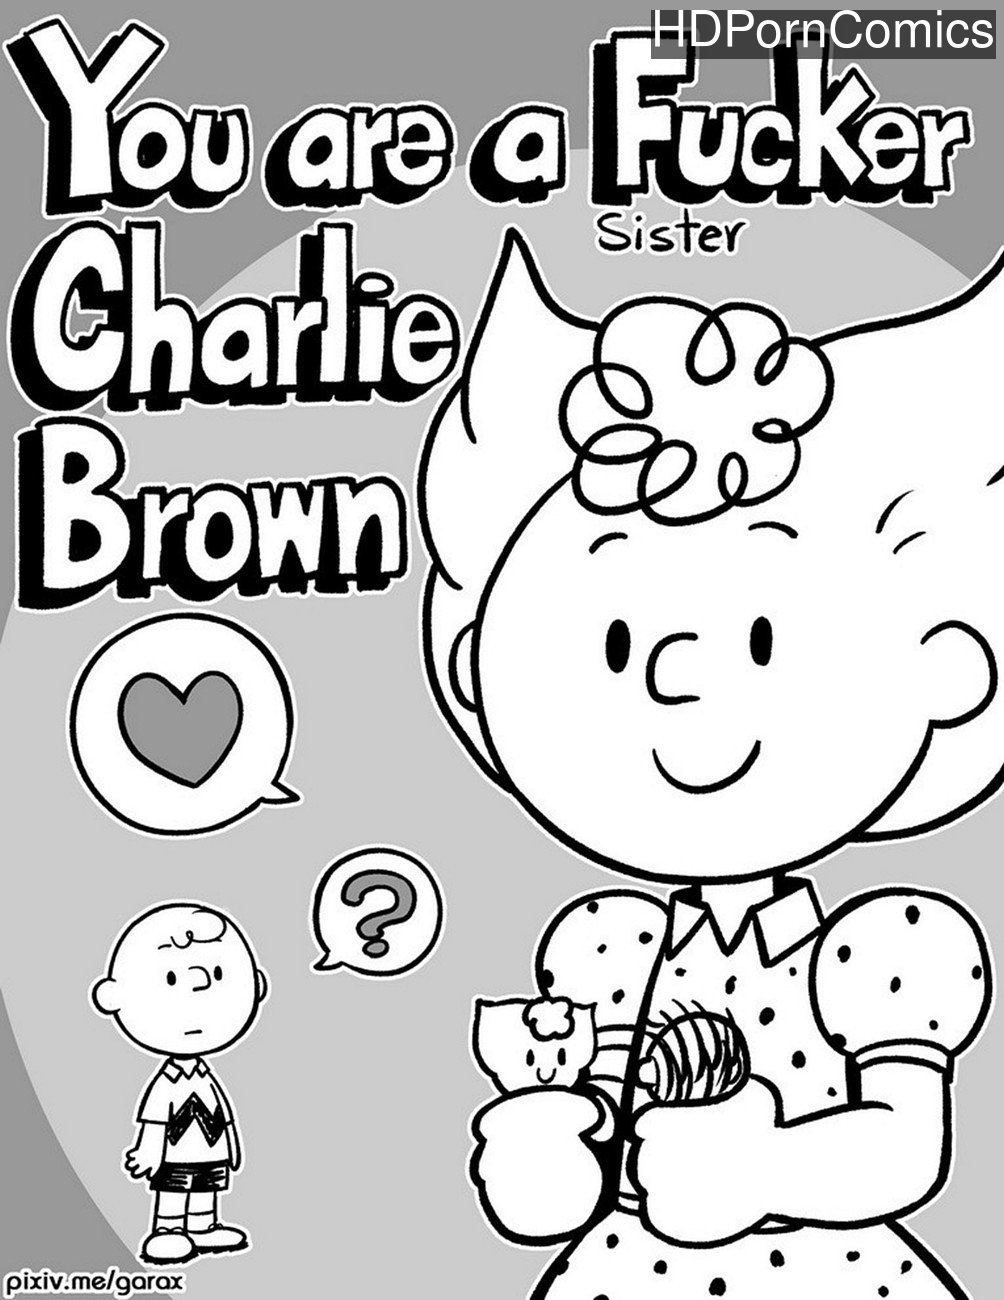 Charlie Brown Cartoon Porn Bondage - You Are A Sister Fucker Charlie Brown 1 comic porn â€“ HD Porn Comics